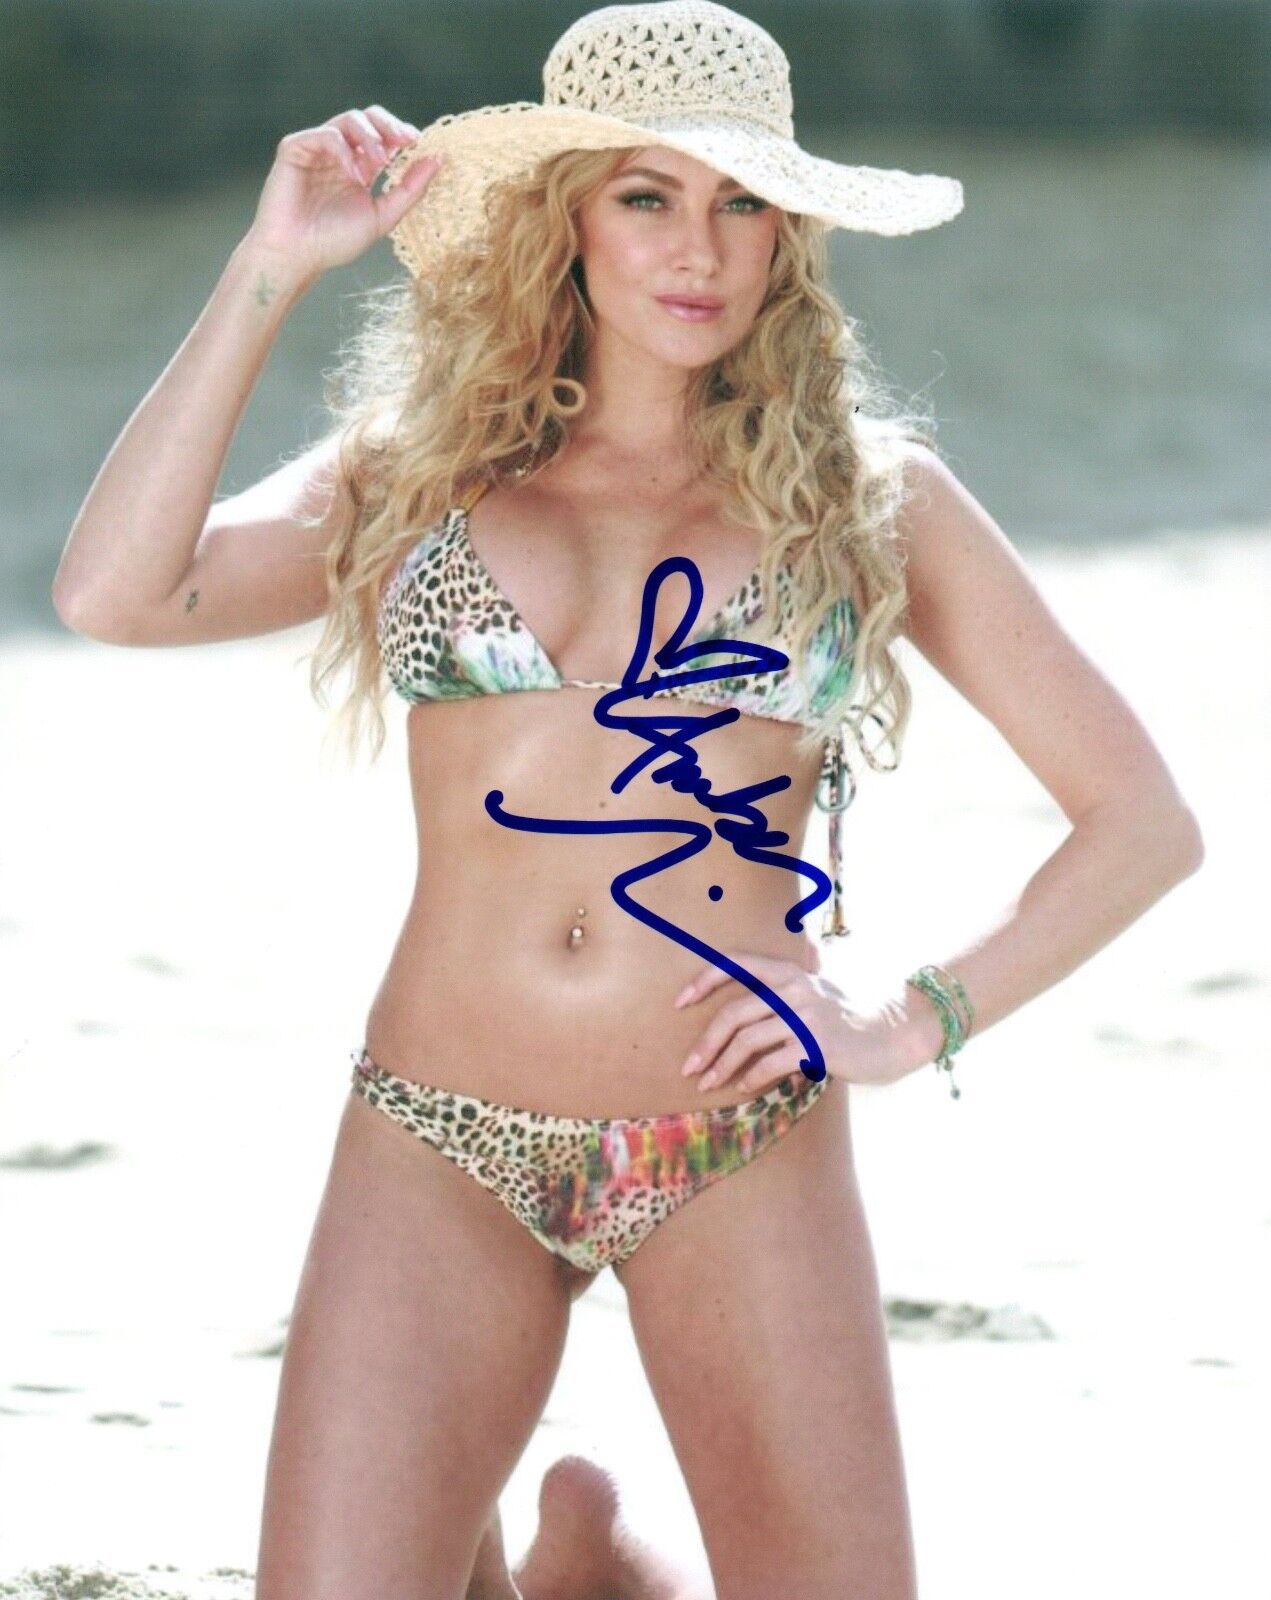 Amber Nichole Miller Signed Autograph 8x10 Photo Poster painting Hot Sexy Model Bikini Pose COA